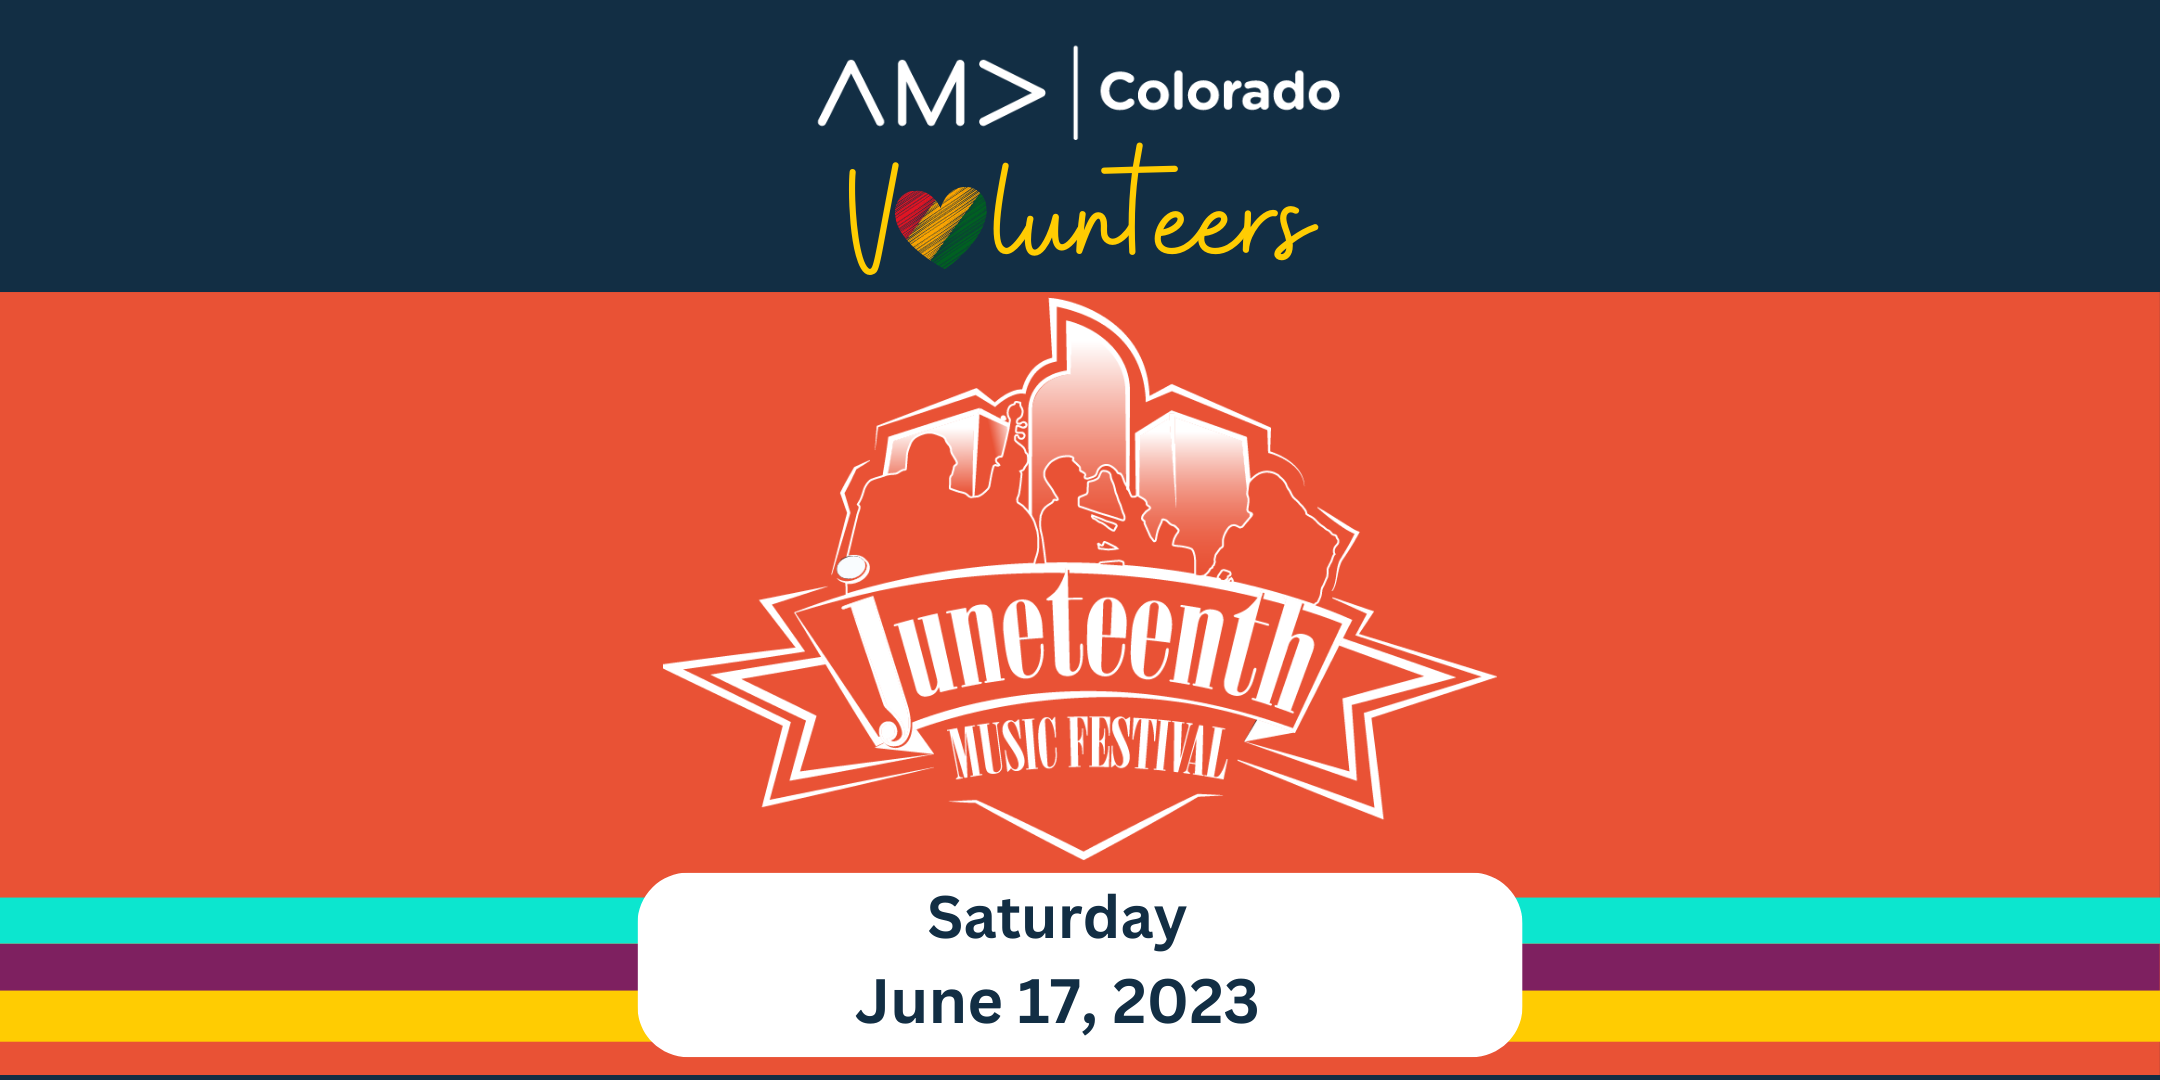 AMA Colorado Volunteers for Denver's Juneteenth Festival graphic image